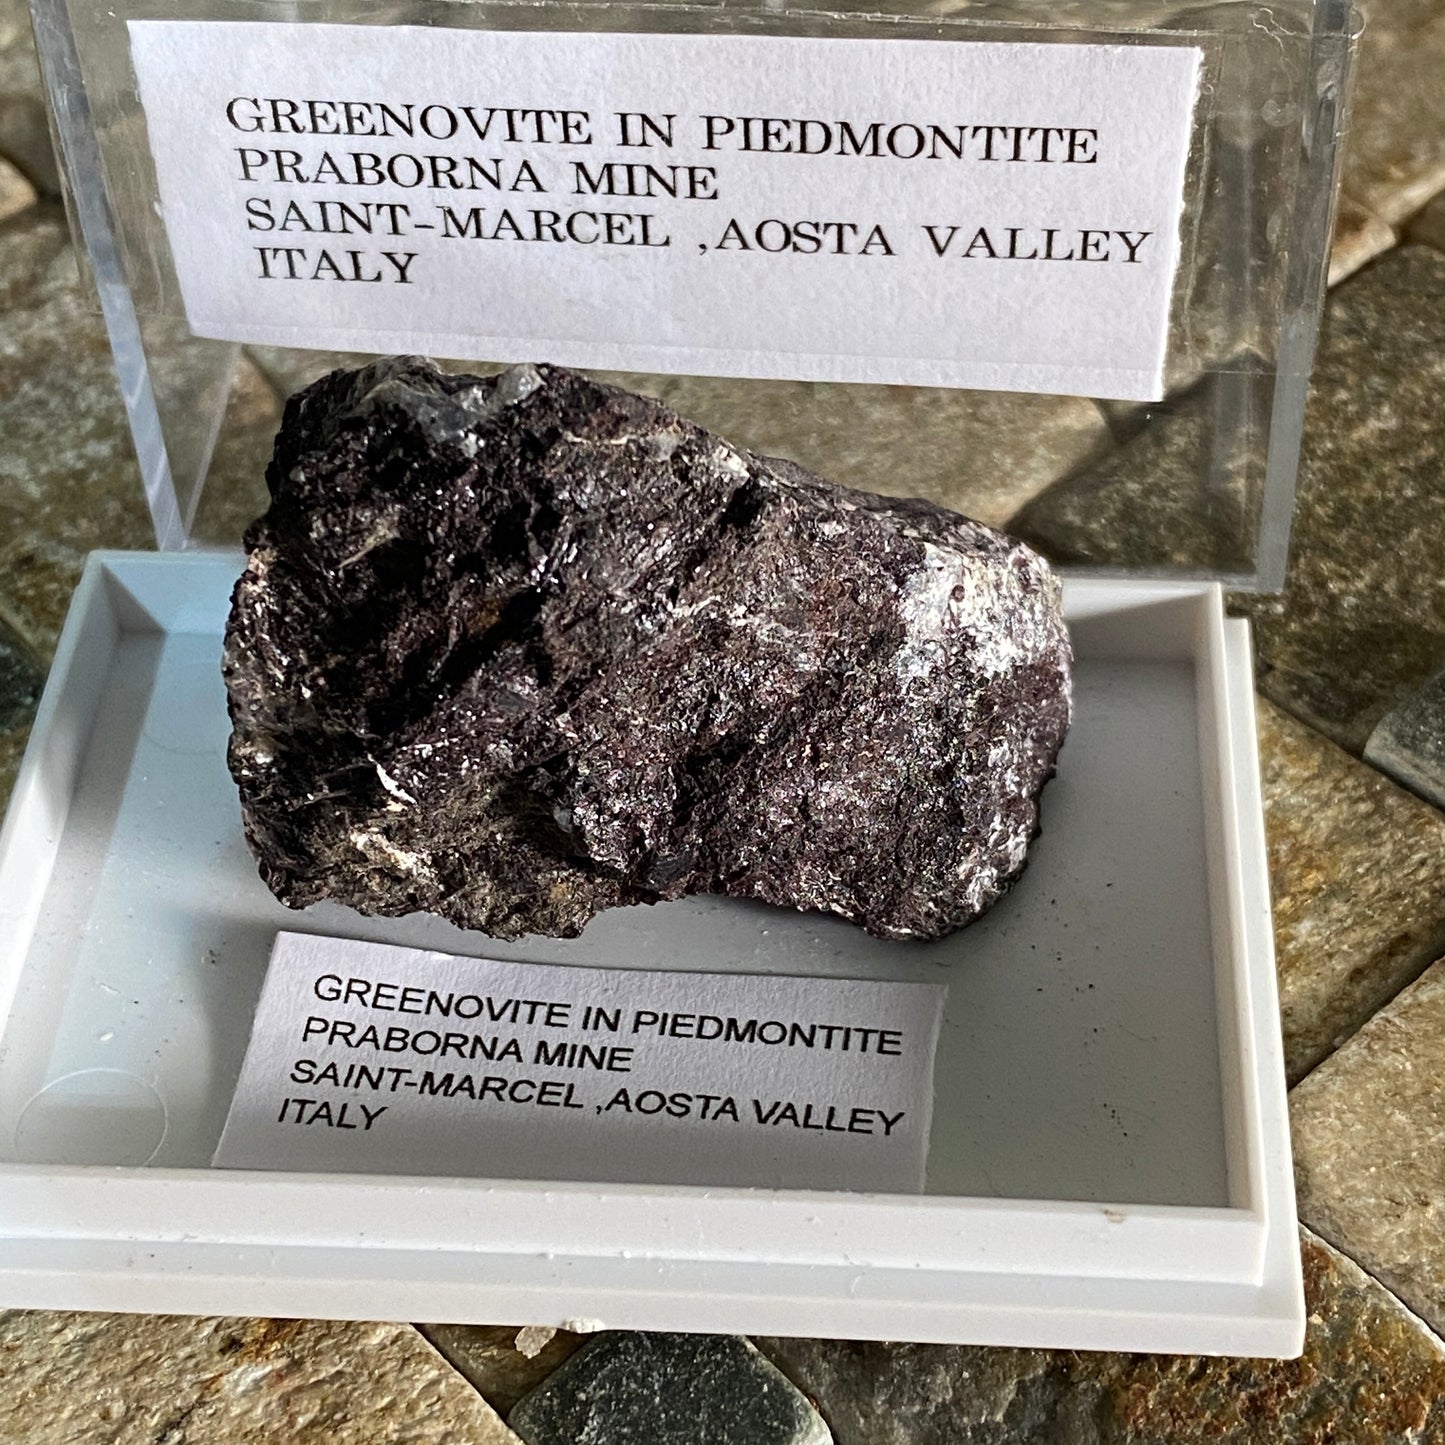 GREENOVITE IN PIEDMONTITE, PRABORNA MINE, AOSTA VALLEY, ITALY  35g MF1677